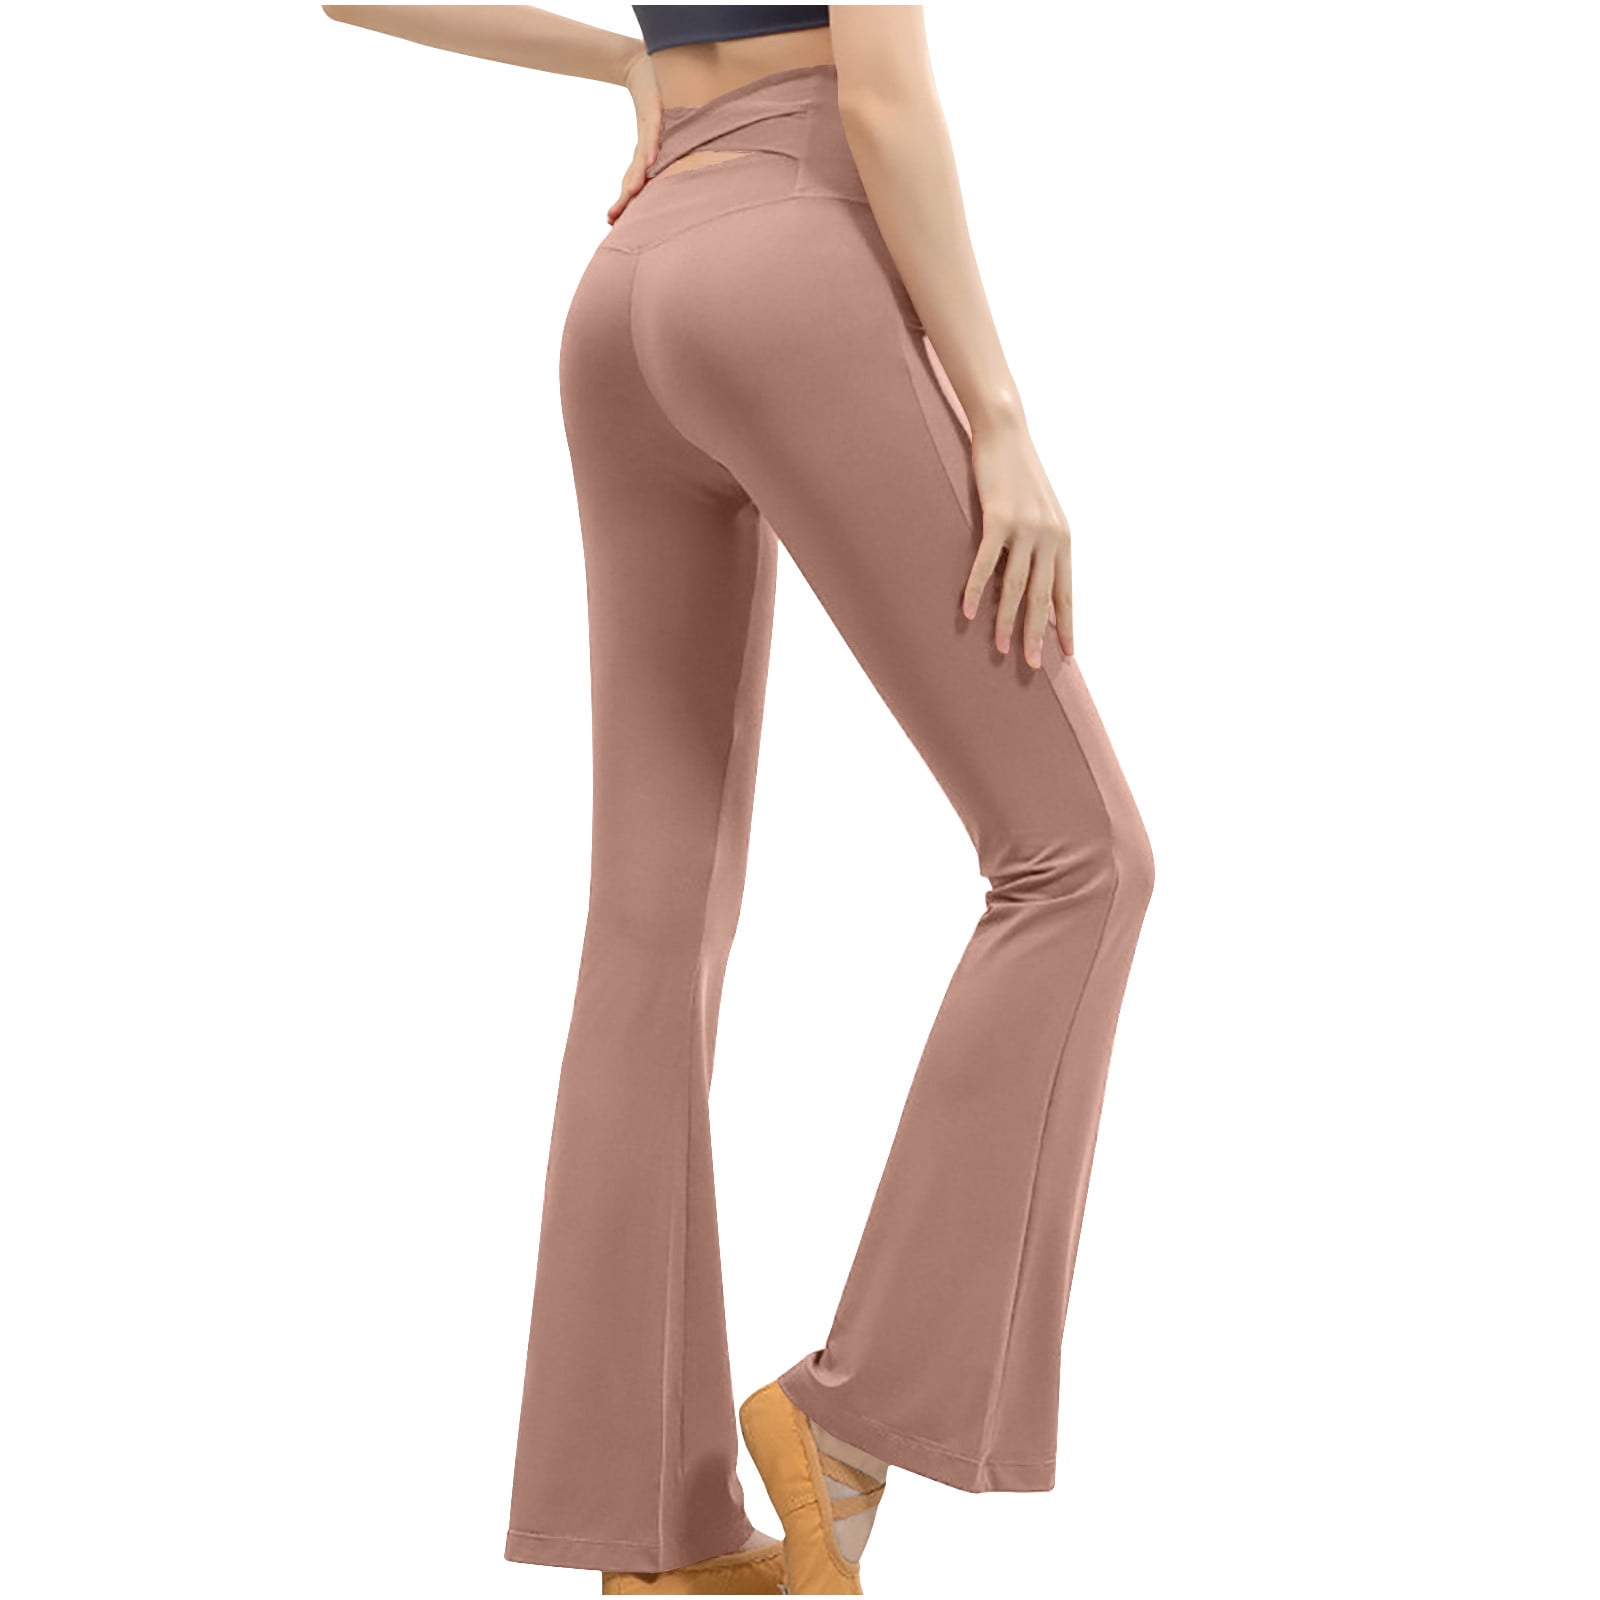 Reduce Price Hfyihgf Women's Bootcut Yoga Pants-Flare Leggings for Women  High Waisted Crossover V-Back Workout Lounge Bell Bottom Jazz Dress Pants(Dark  Gray,S) 